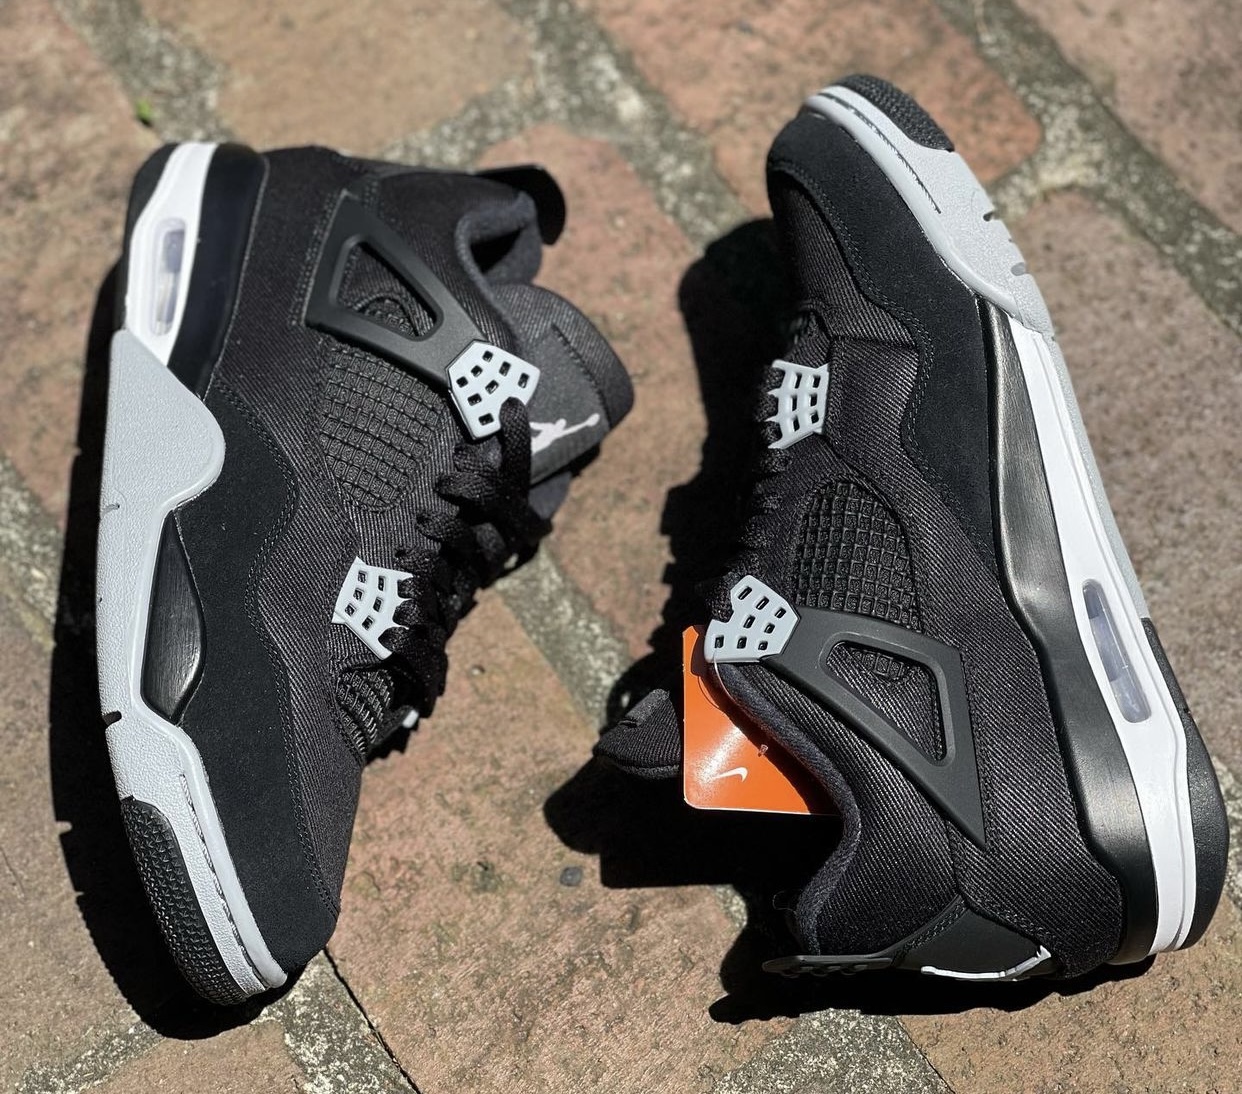 The Jordan 4 Black Canvas Releases In October - Sneaker News